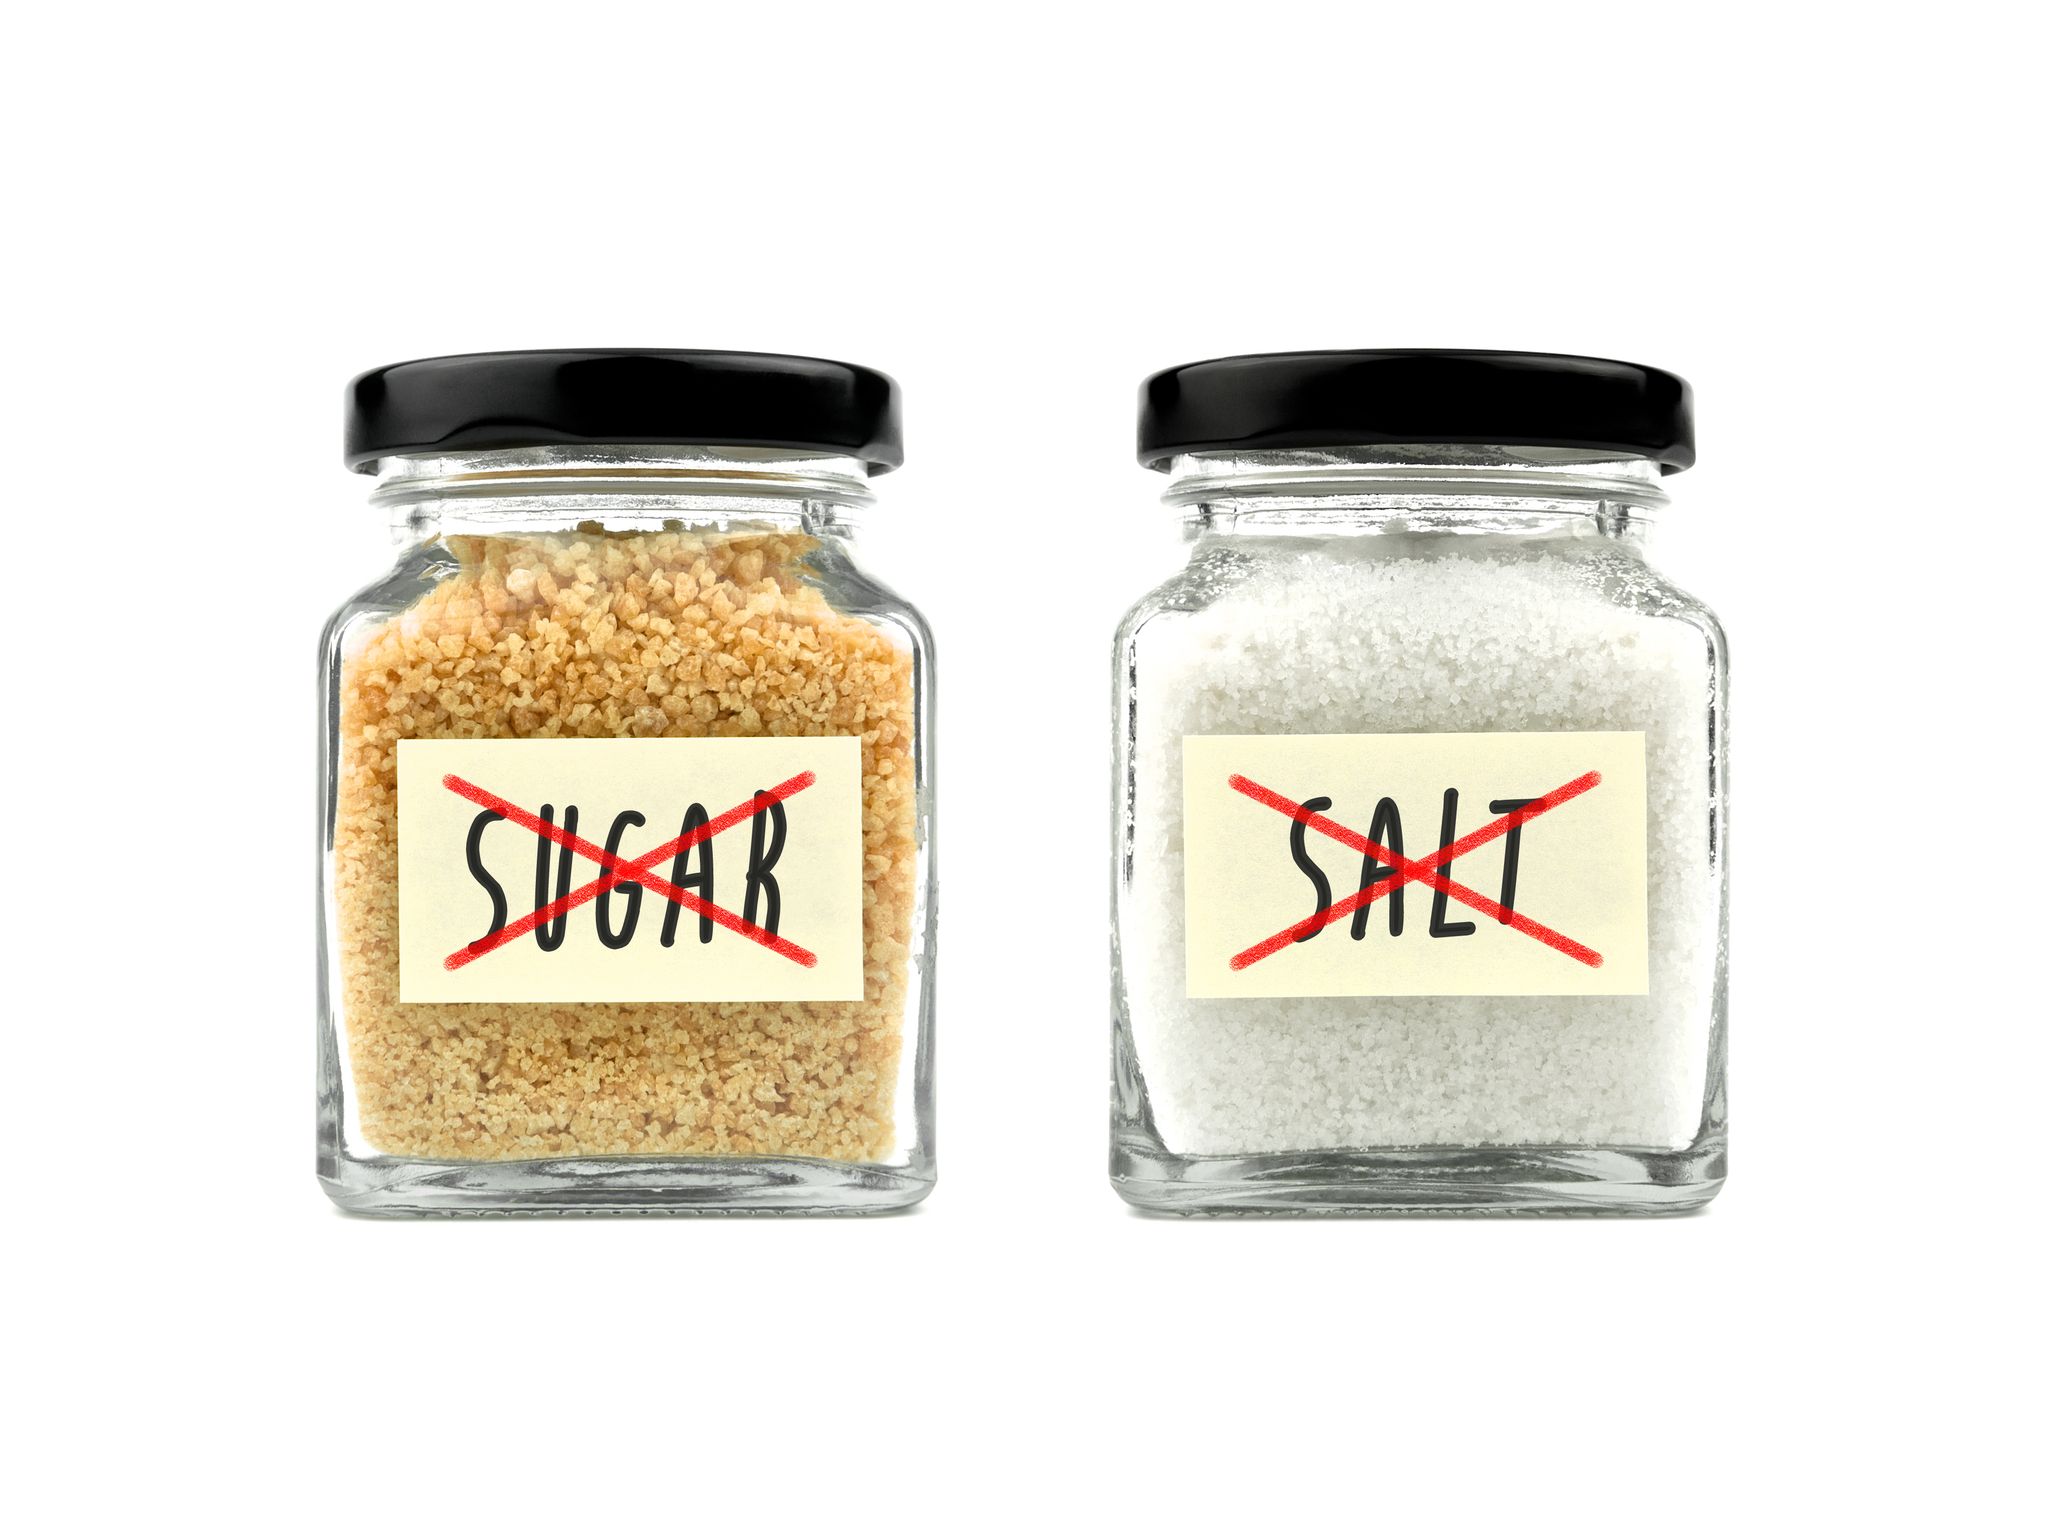 salt versus sugar